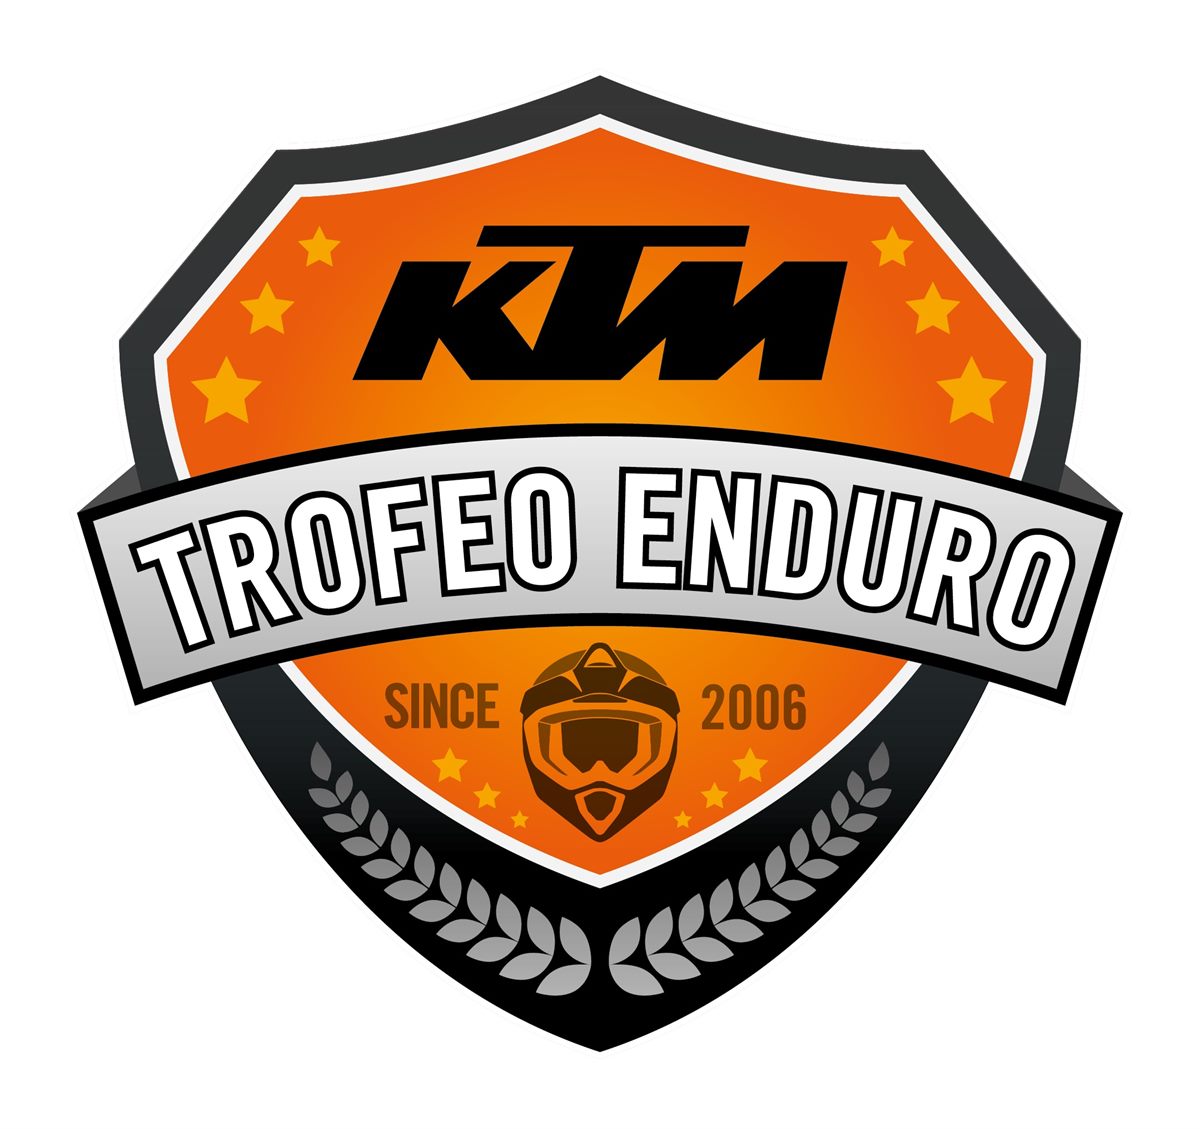 KTM Trofeo Enduro Logo Since 2006